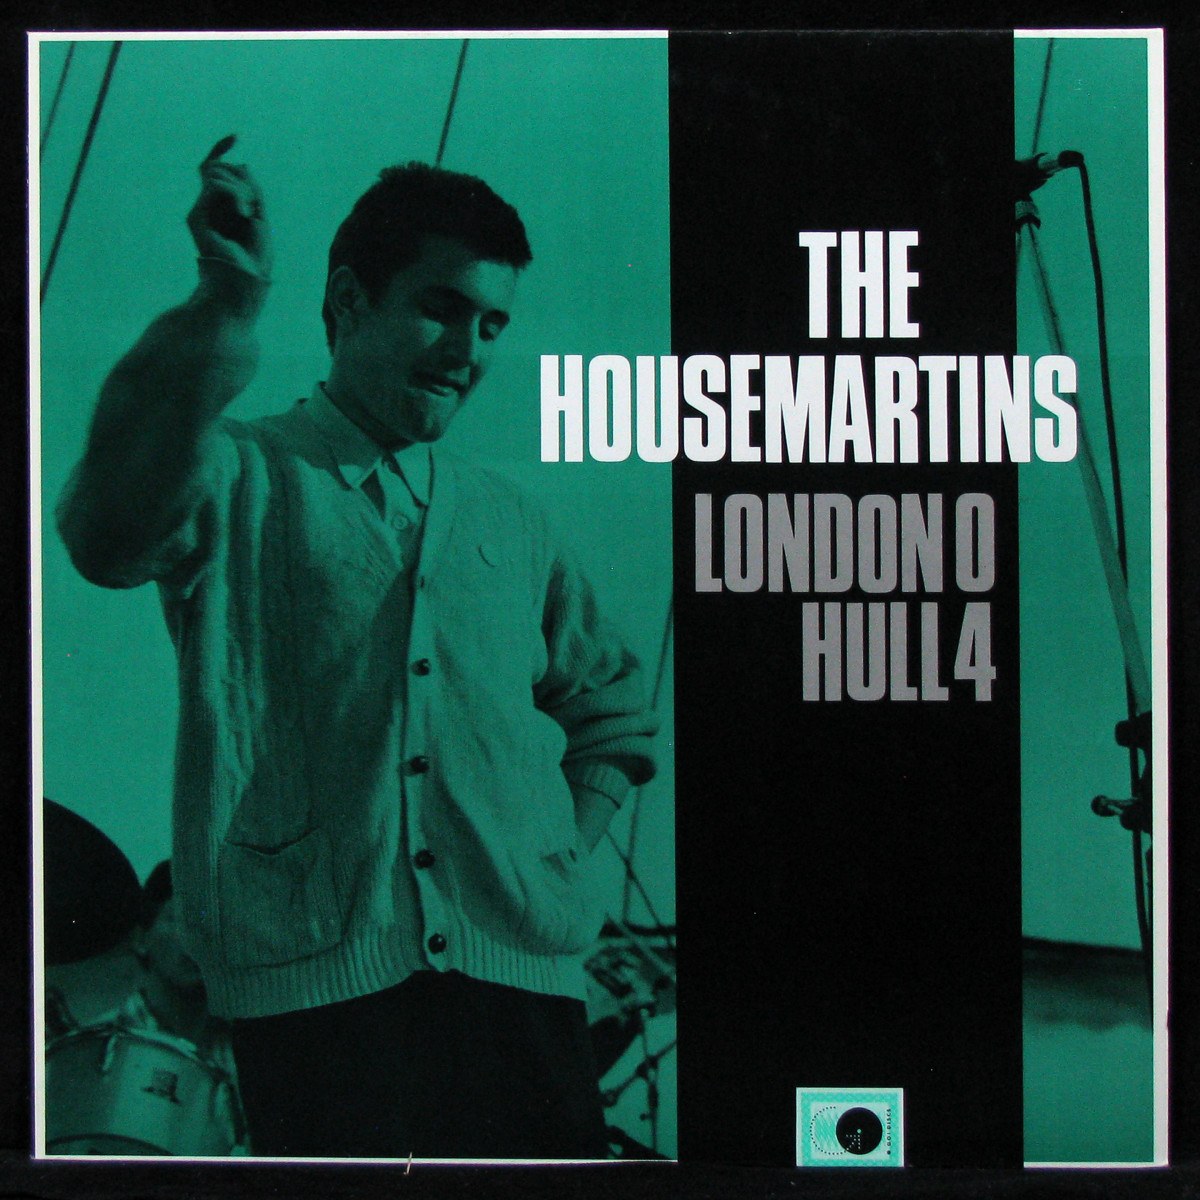 LP Housemartins — London 0 Hull 4 фото